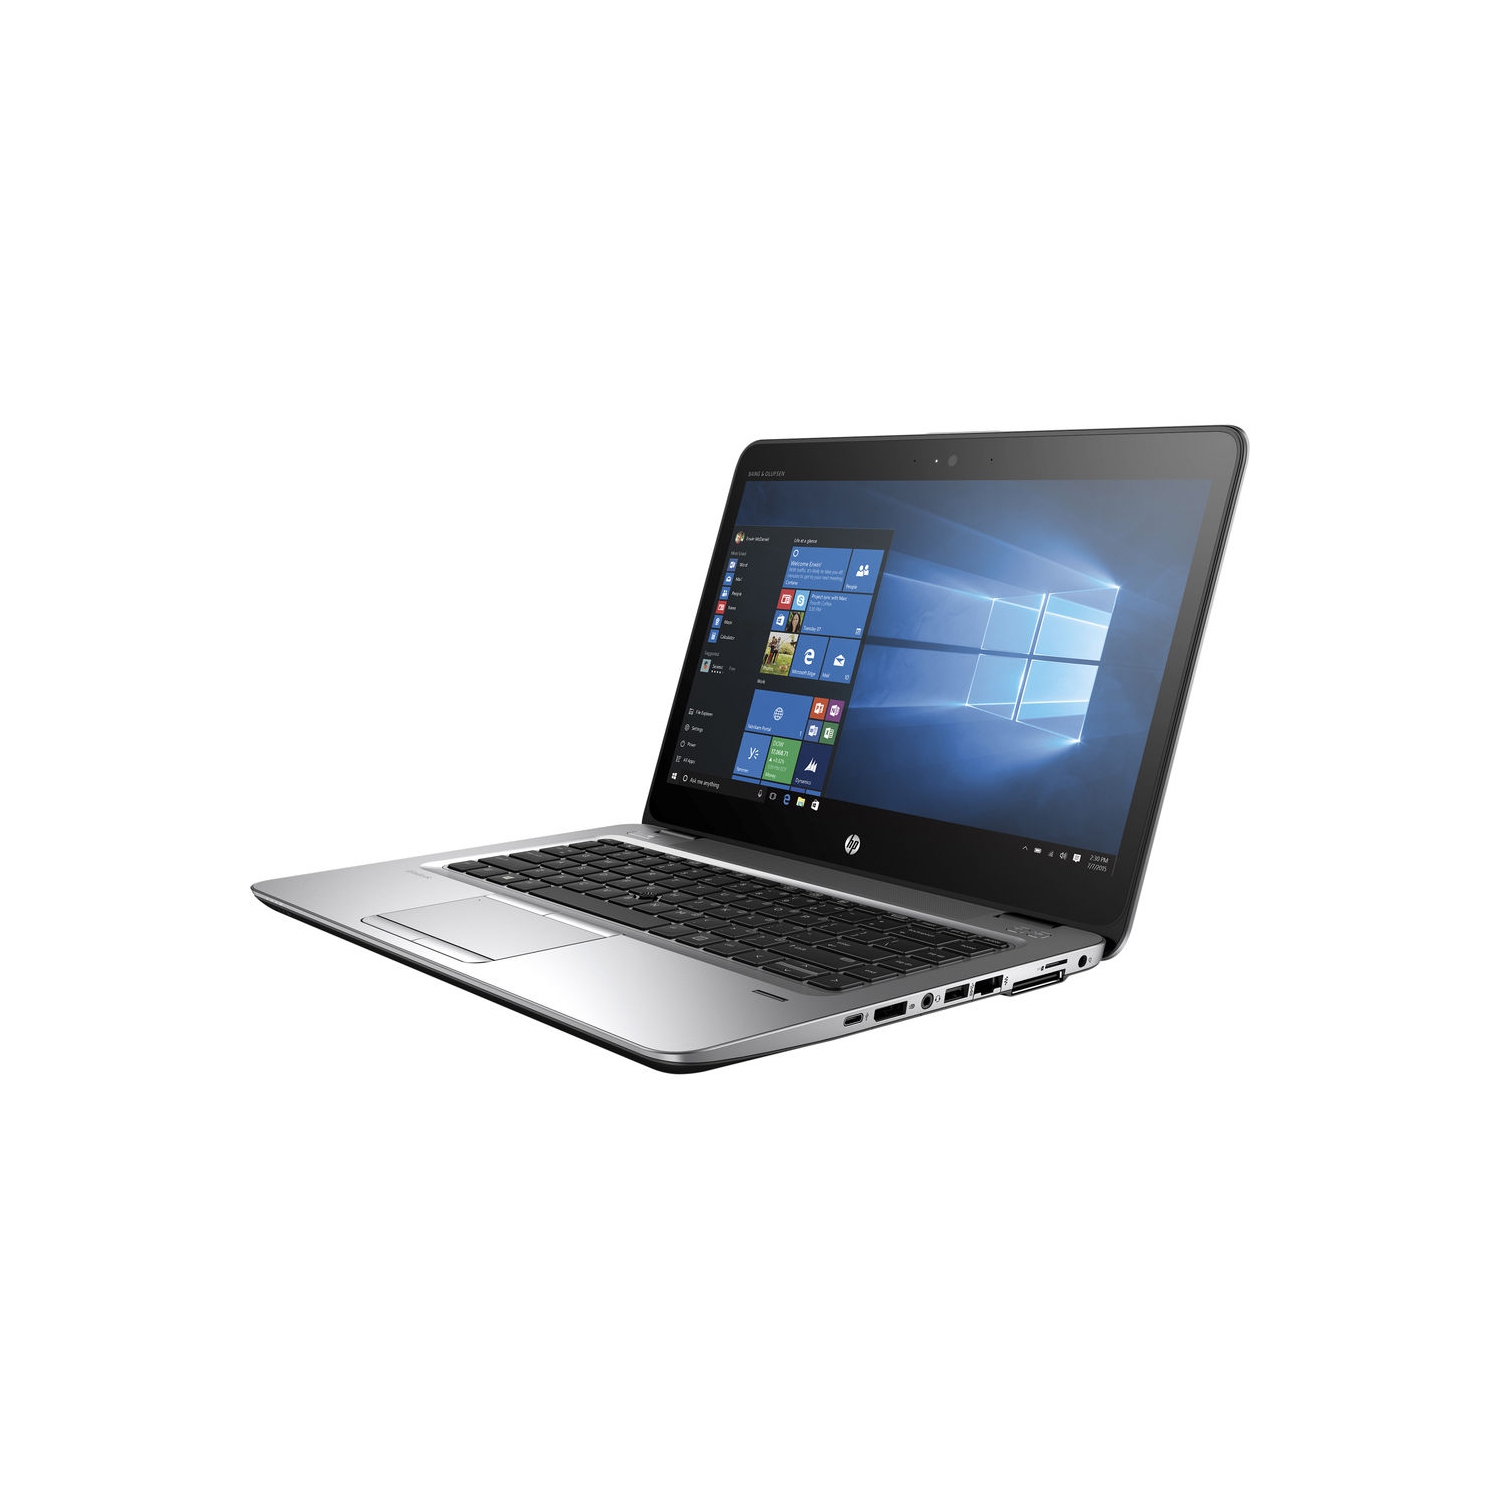 Refurbished (Good) - HP EliteBook 840 G3 14" Laptop - Intel Core i5-6300u - 8GB RAM - 256GB SSD - Windows 10 Pro